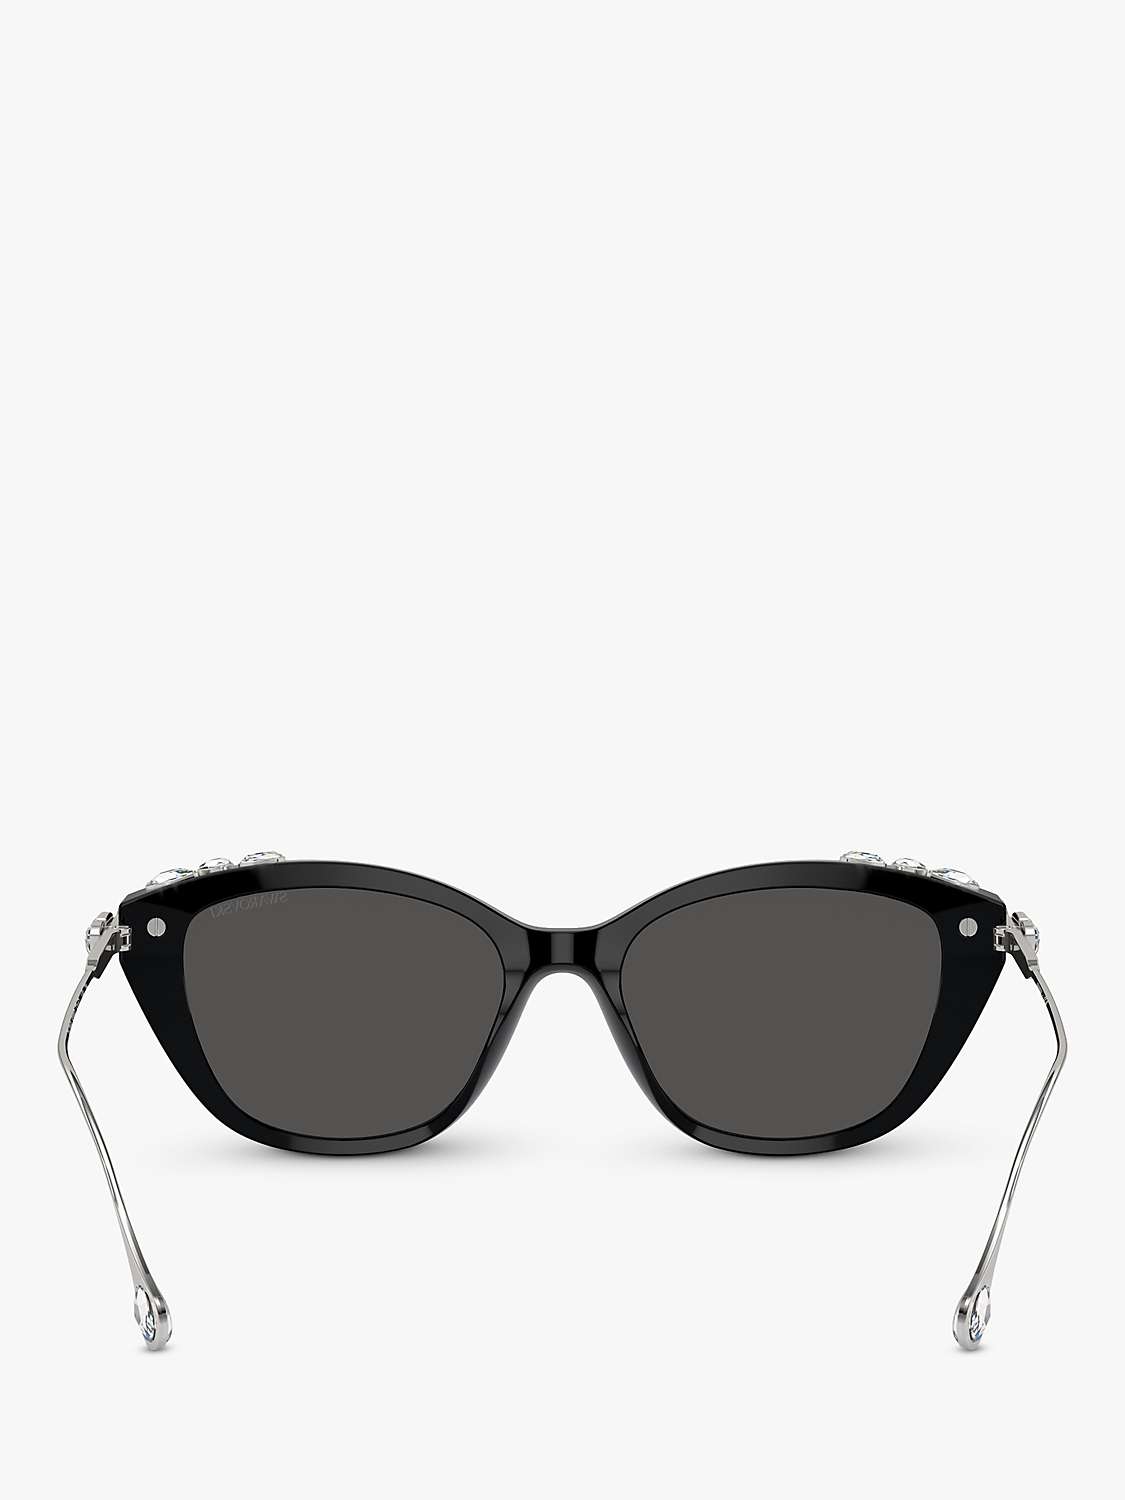 Buy Swarovski SK6010 Women's Crystal Cat's Eye Sunglasses, Black Online at johnlewis.com